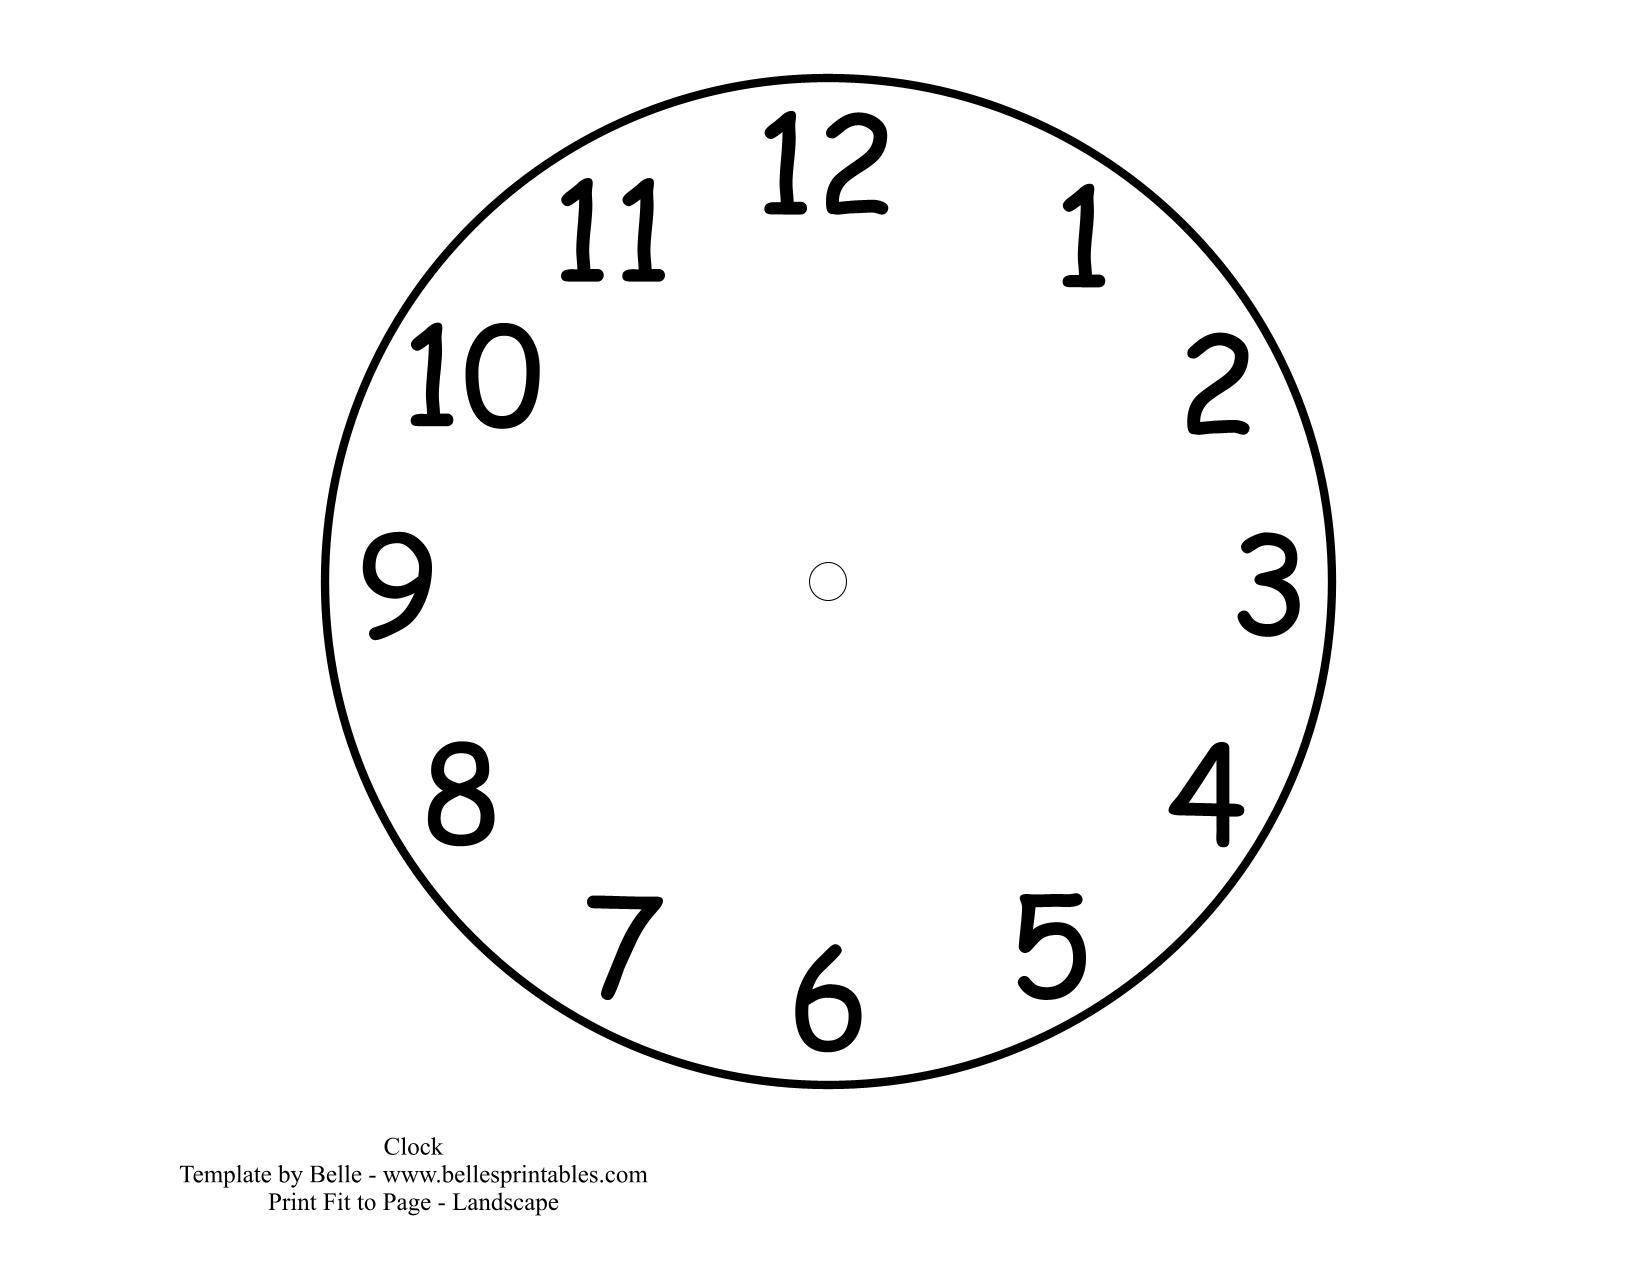 Цифры на часах разные. Циферблат часов. Макет часов для печати. Шаблон часов для детей. Макет часов для детей.